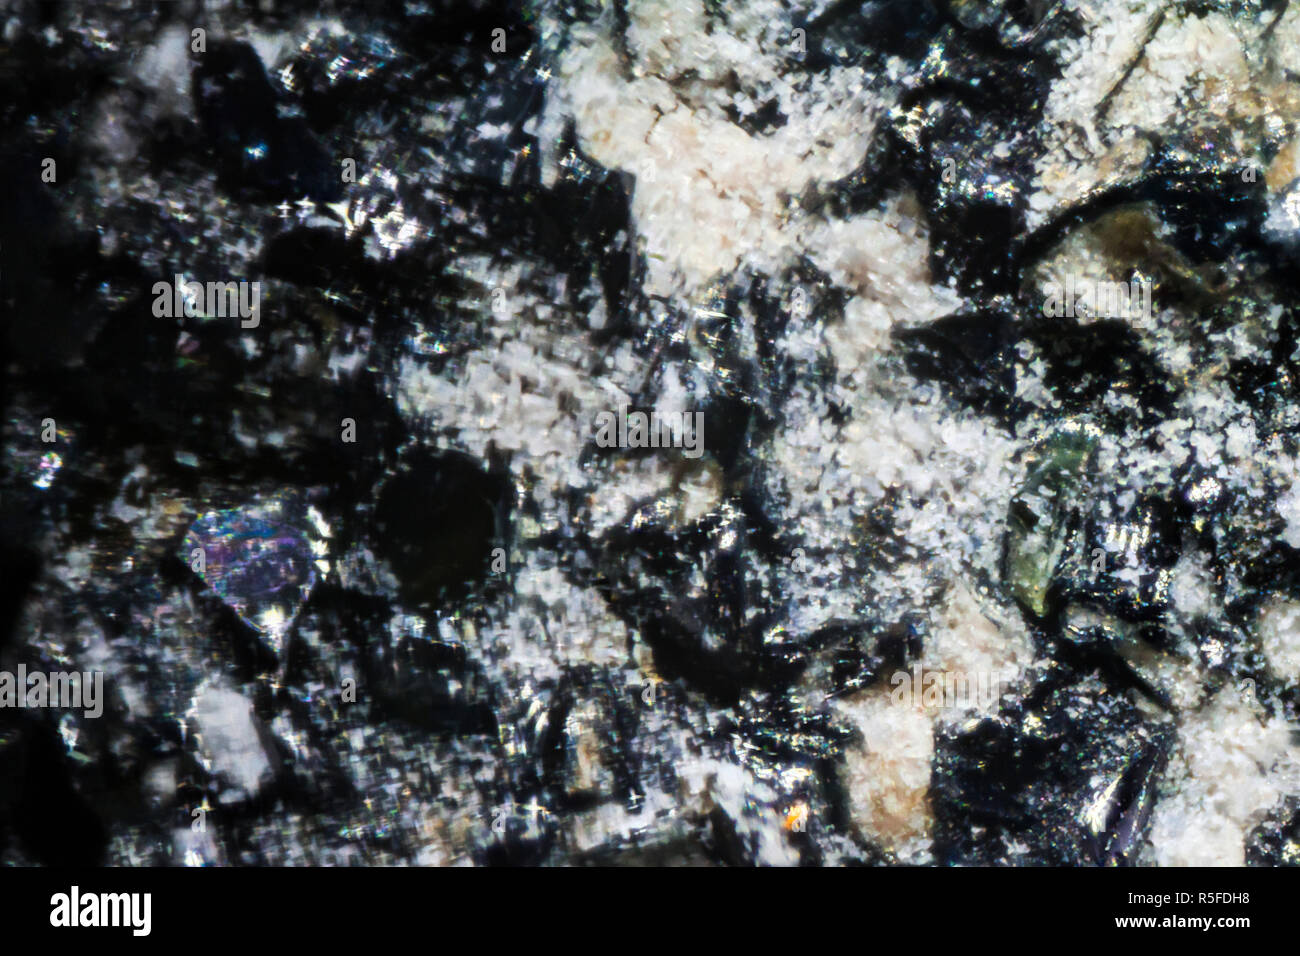 File:Glitter nail polish under the microscope, magnification x100.jpg -  Wikipedia